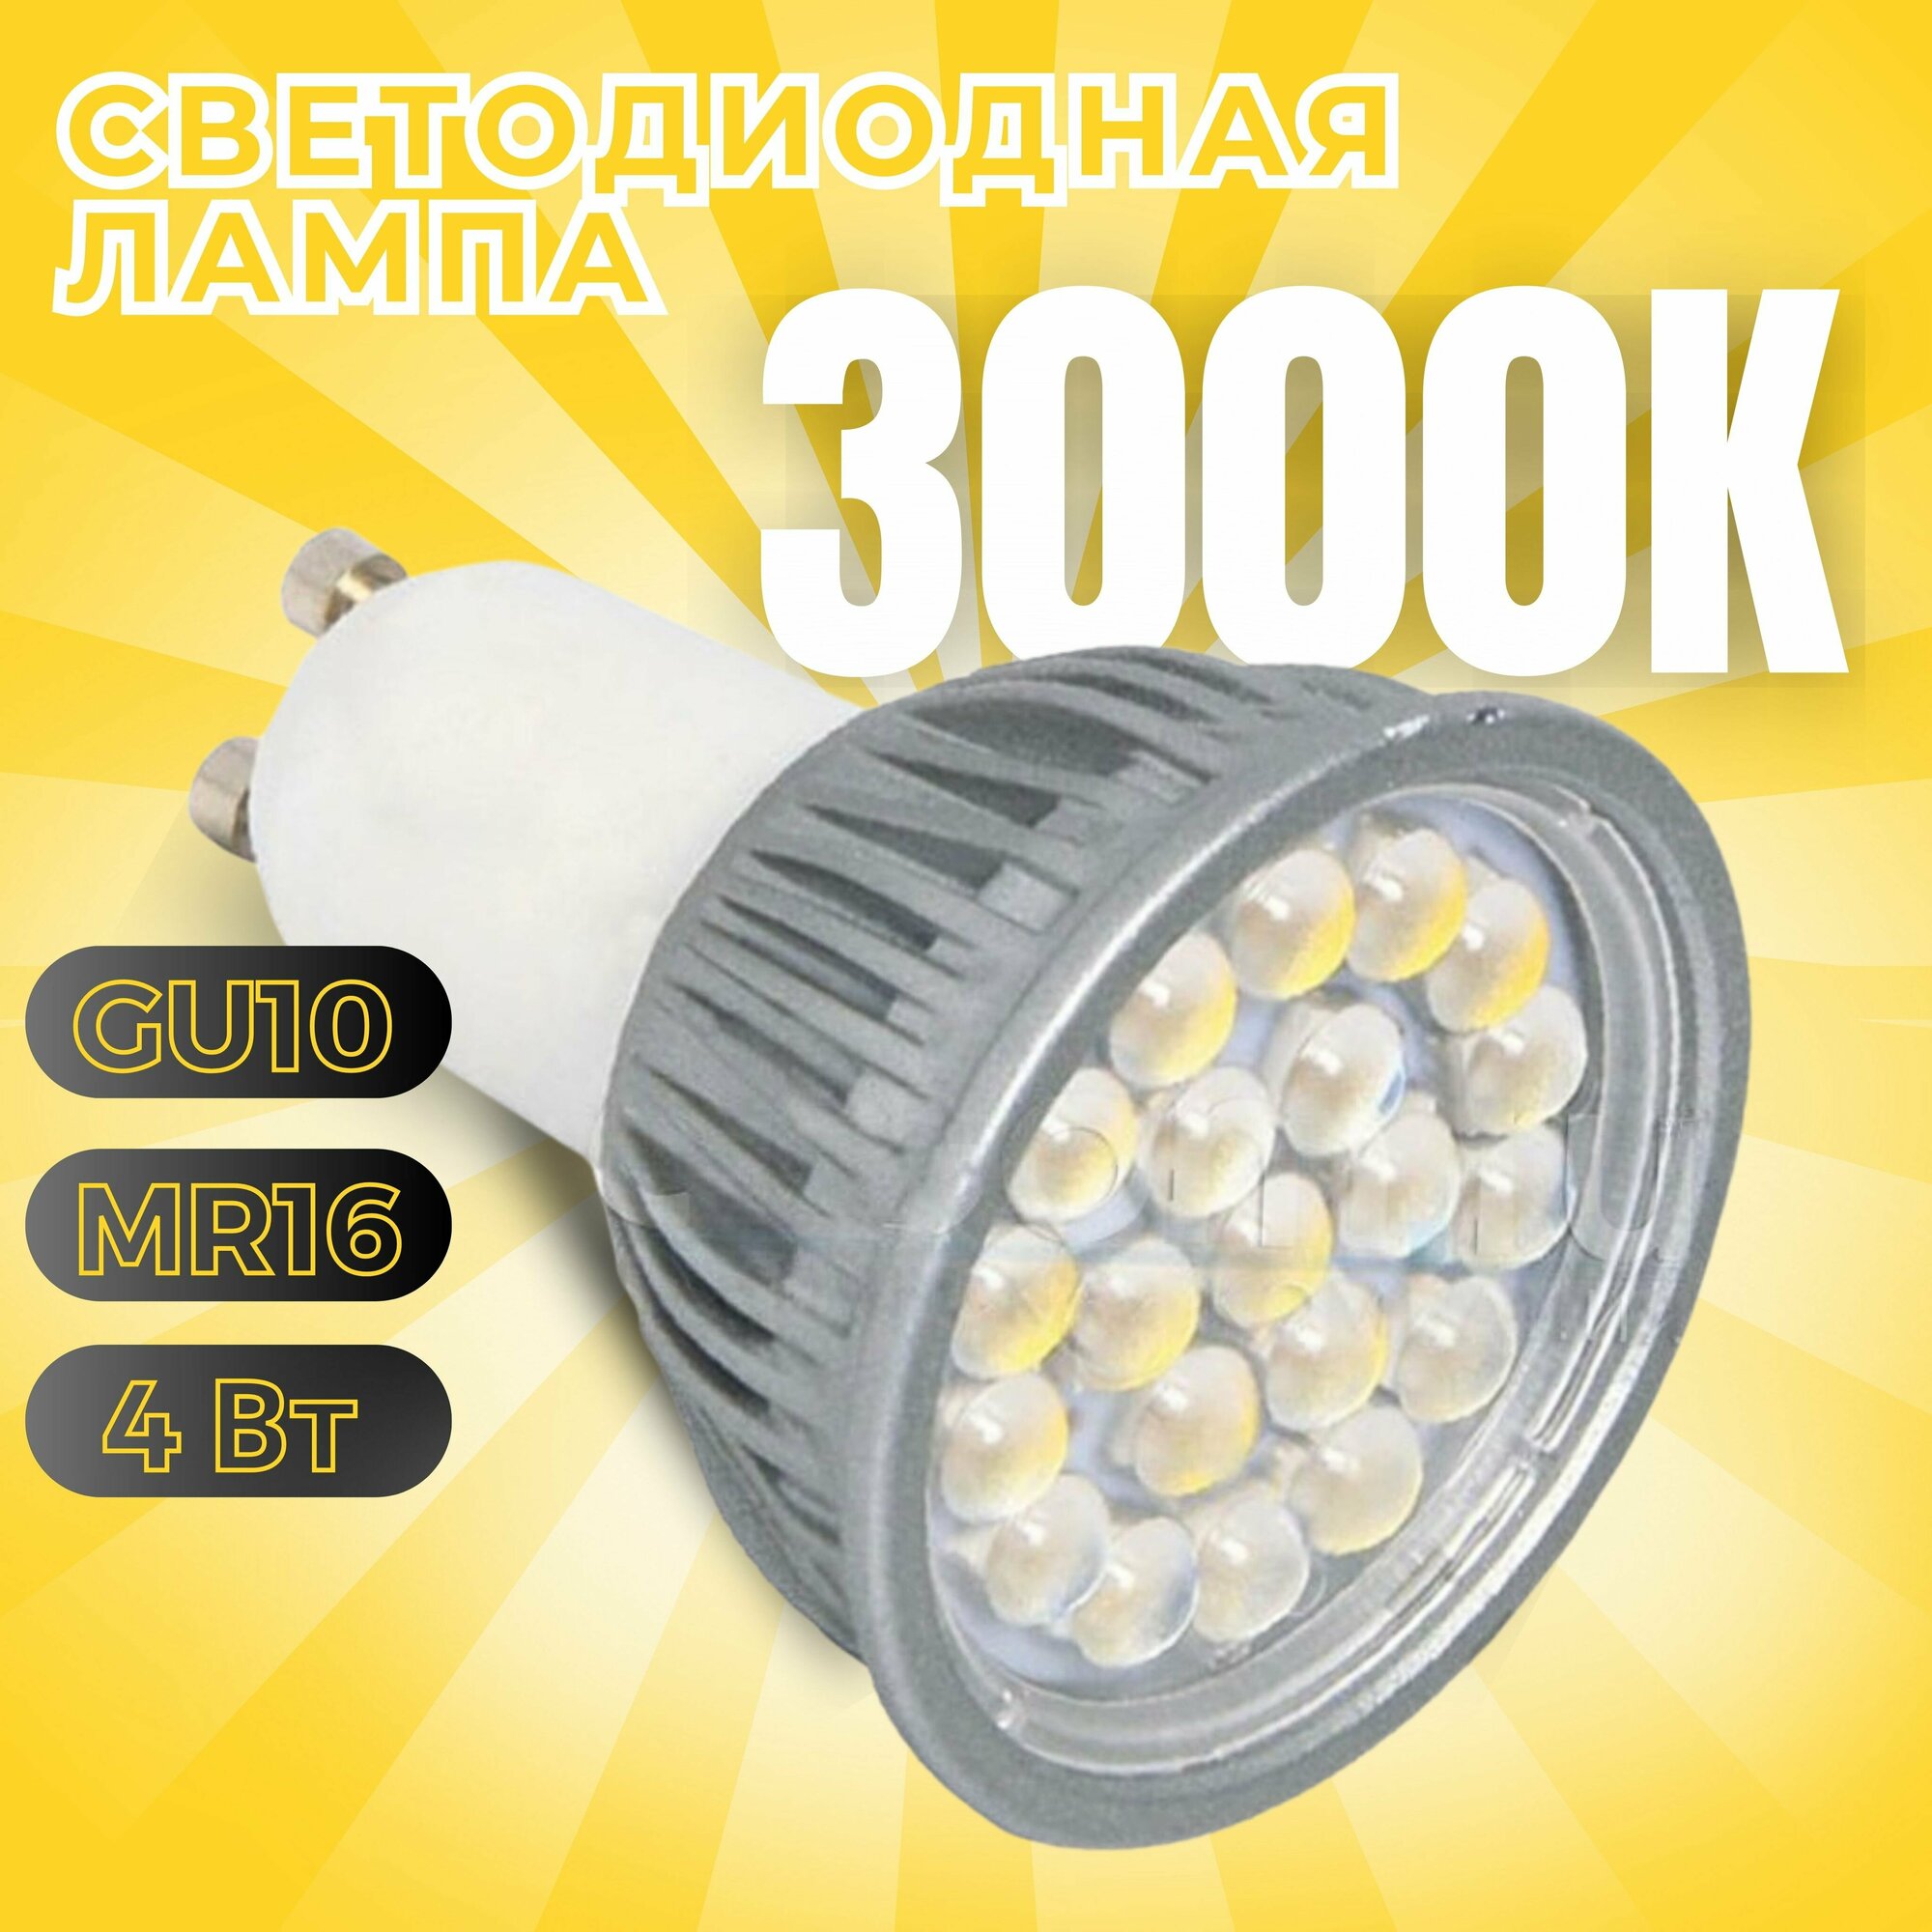 Лампочка GLS, лампа светодиодная "LED", MR16, 5050 21SMD GU10, 4 Вт, 3000K, 400Лм, теплый белый свет